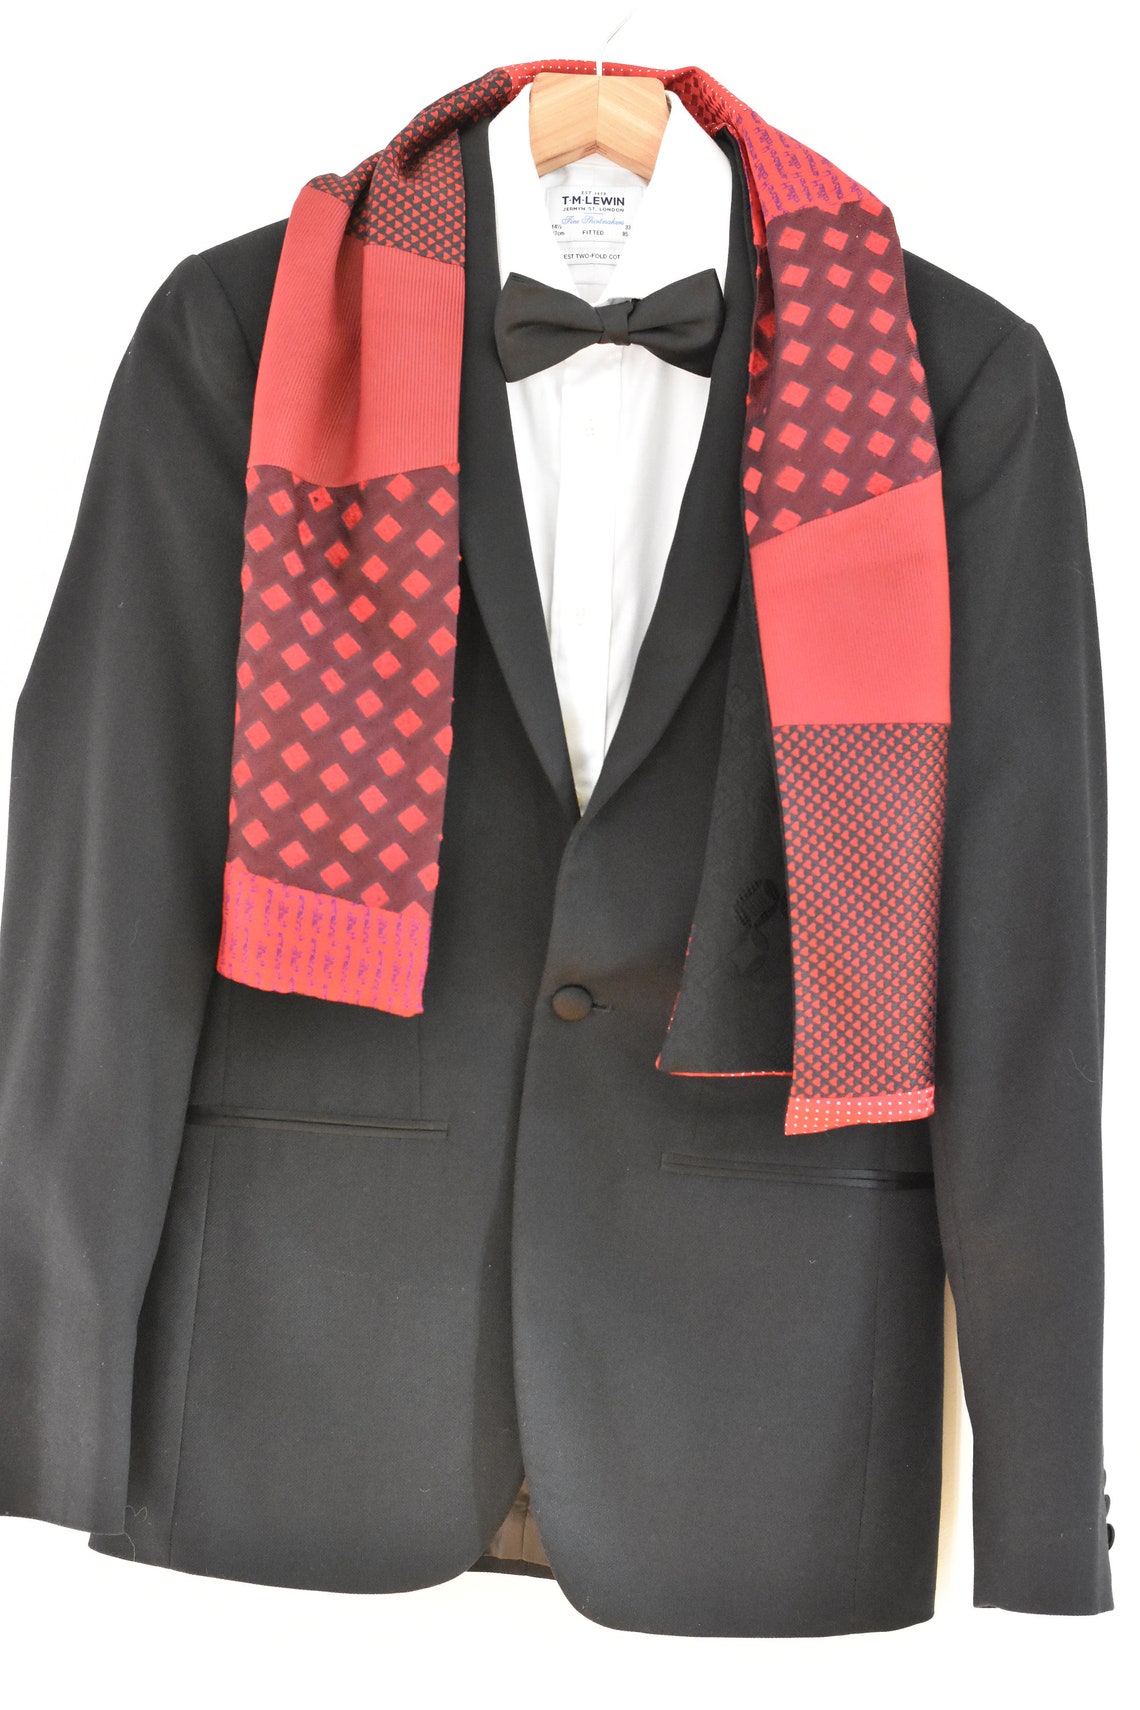 Red & black men's or women's vintage silk tie kimono | Etsy